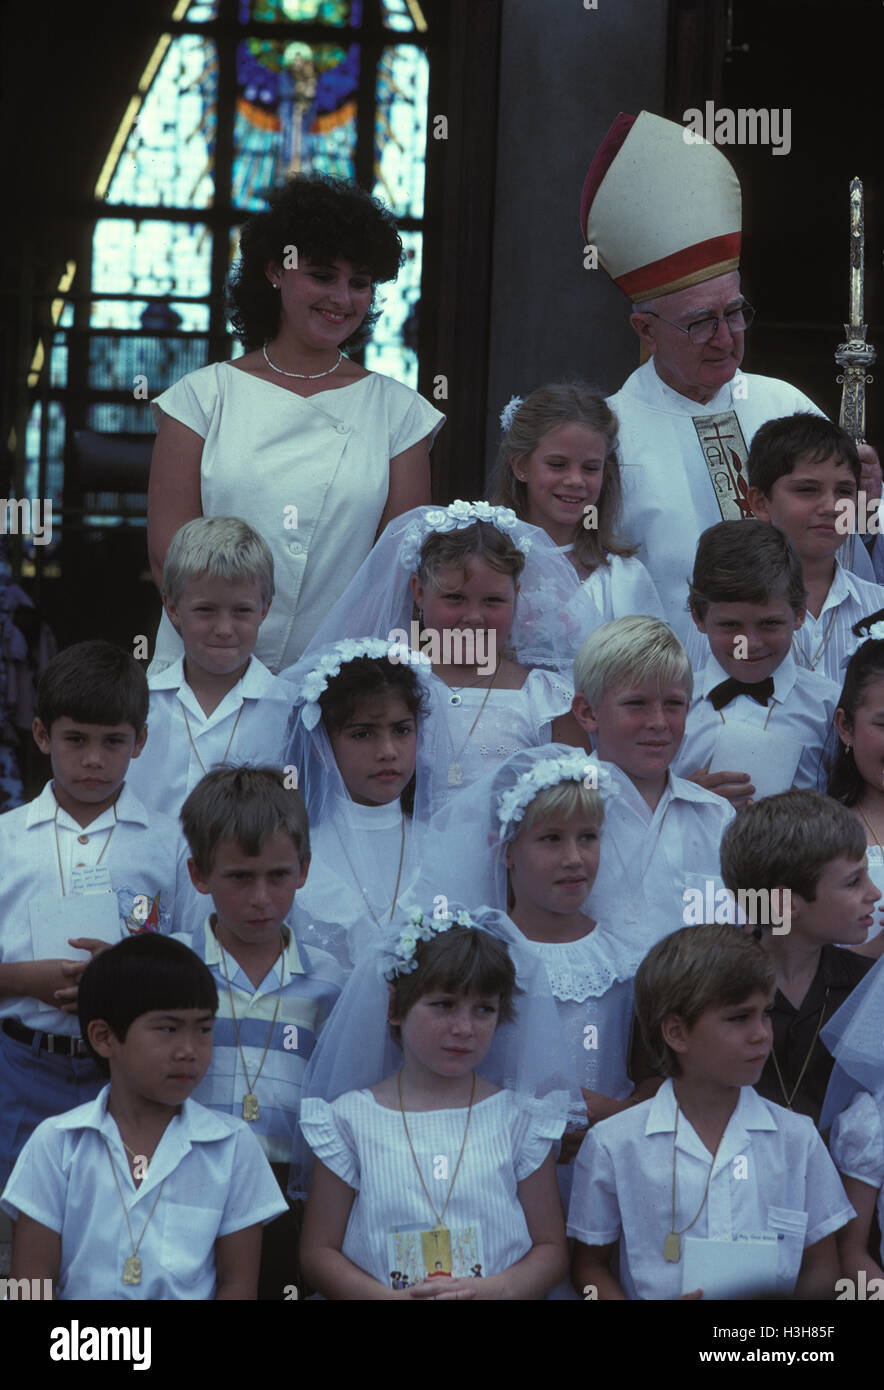 Children at First Communion. Stock Photo